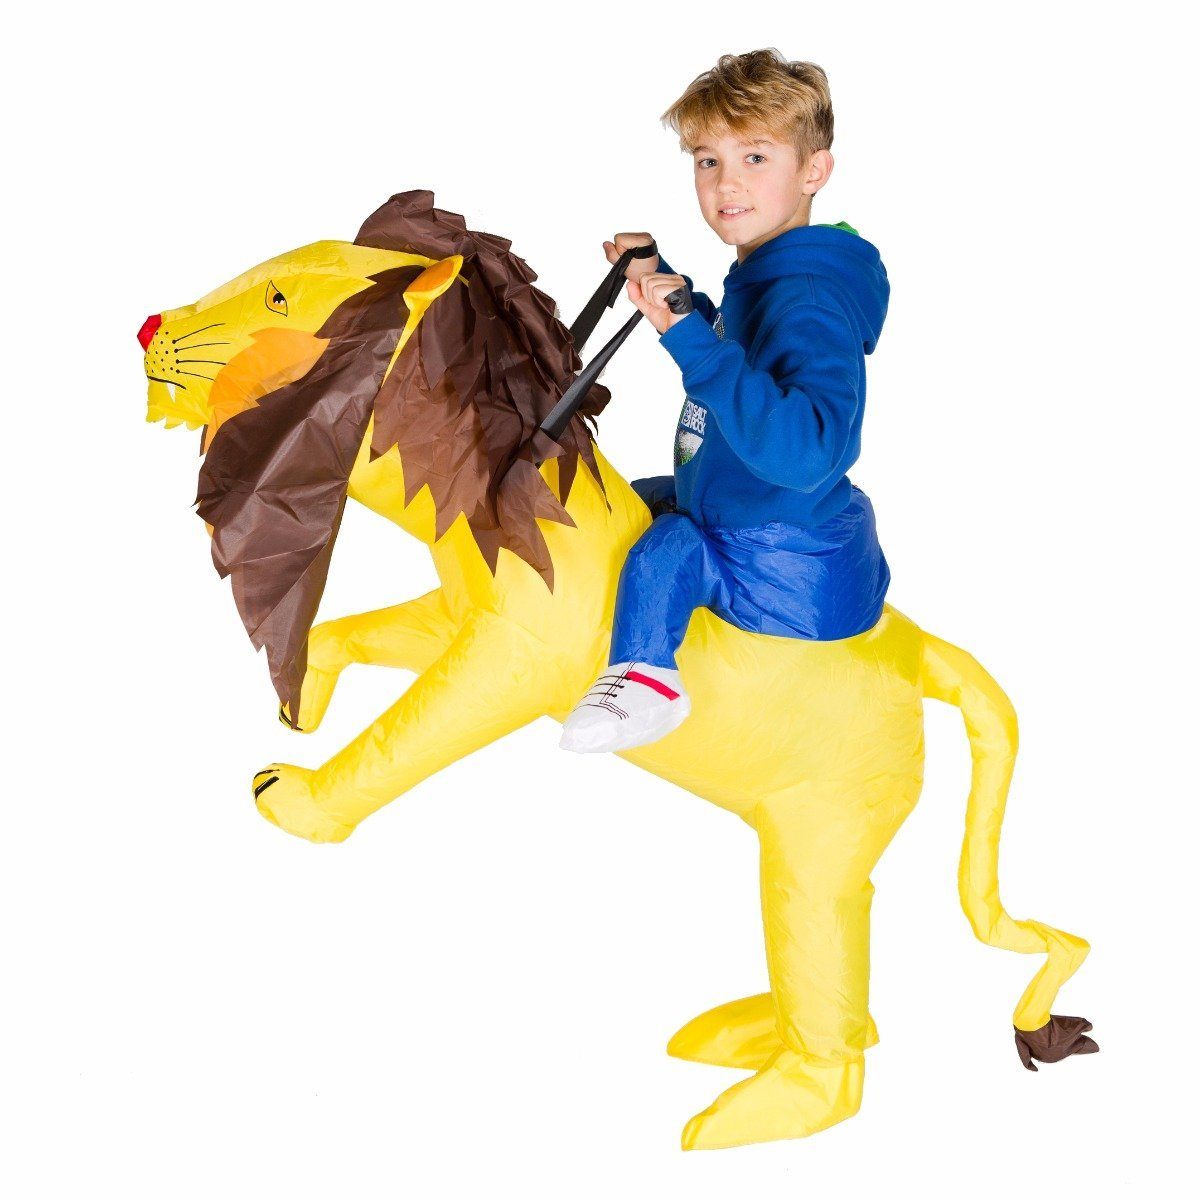 Fancy Dress - Kids Inflatable Lion Costume